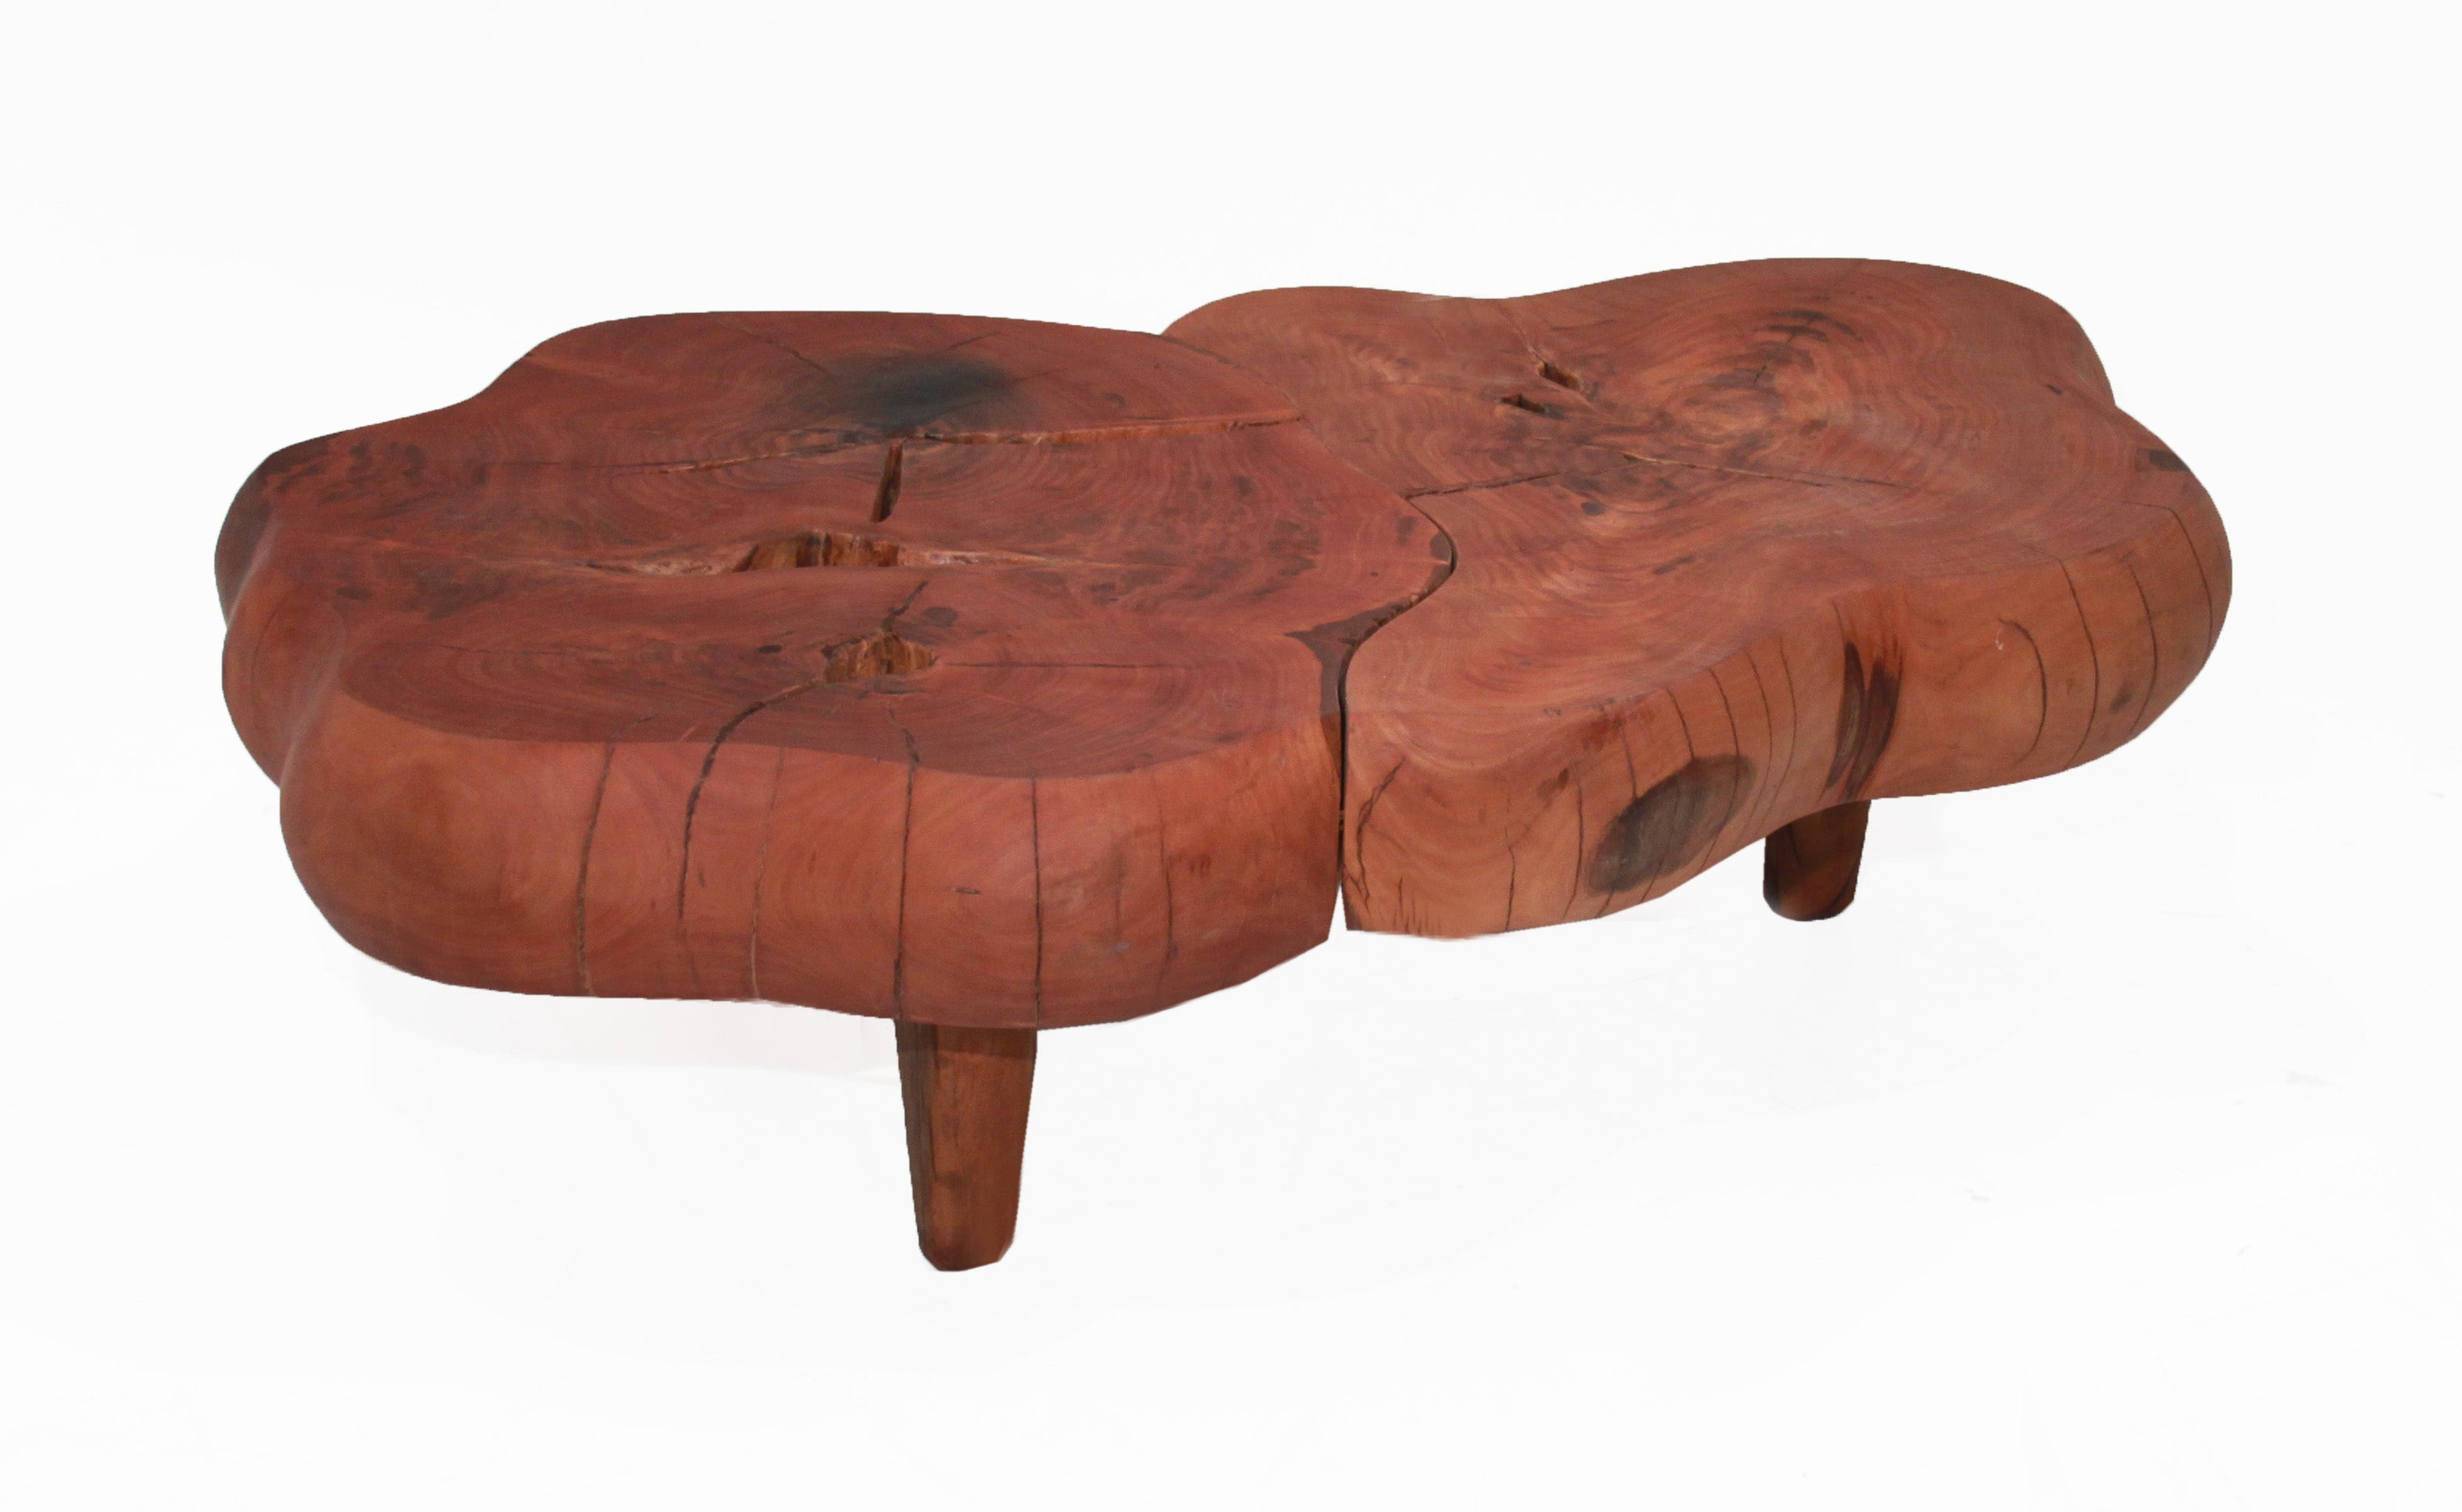 Double Eucalipto Vermelho coffee table on three legs by Tunico T.